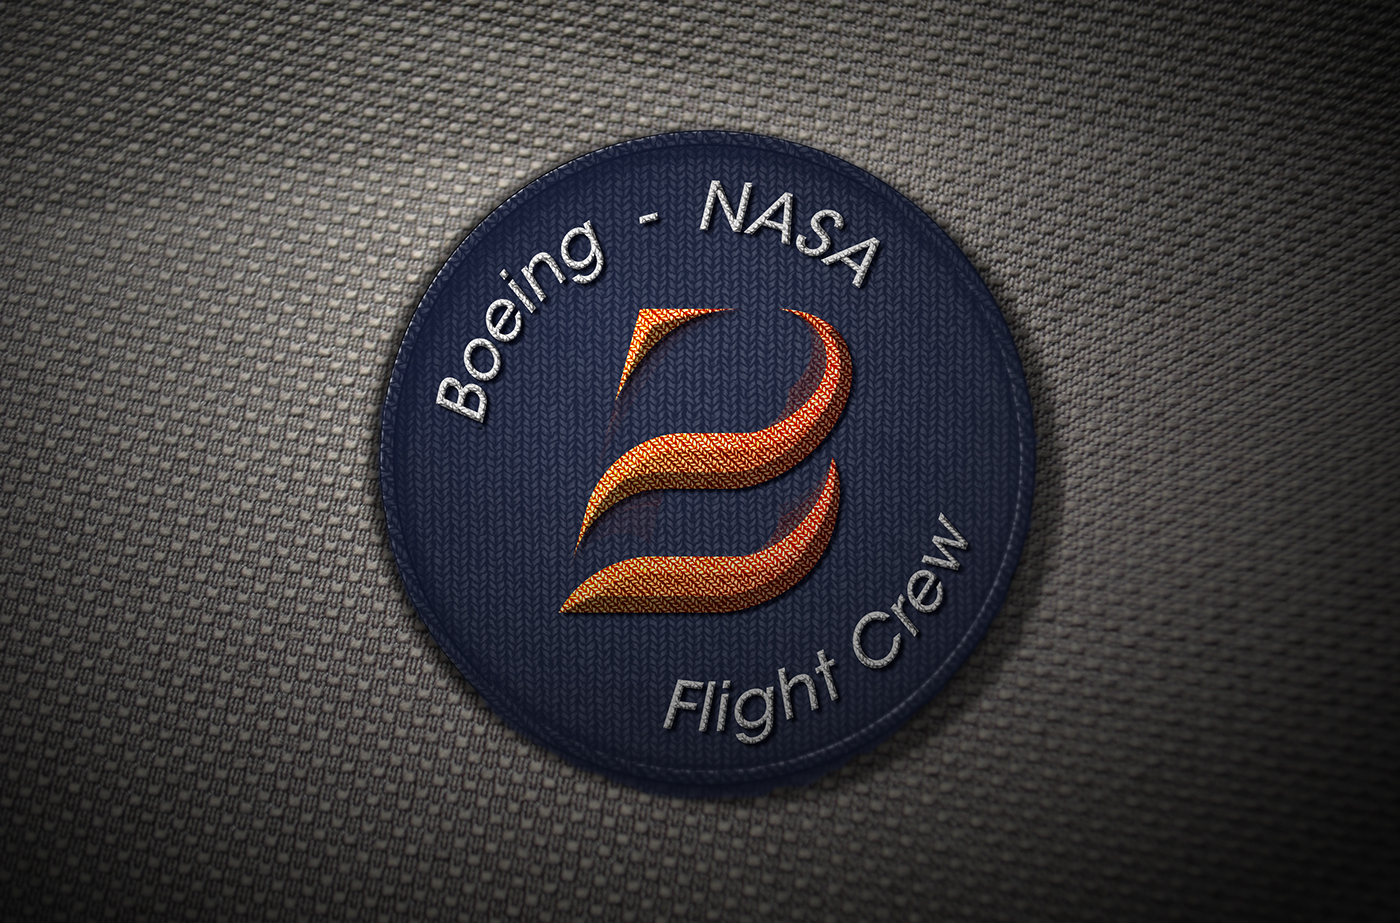 Rebrand branding  Boeing Aerospace Design industrial design  Aerospace Identity Design Branding design Digital Art 